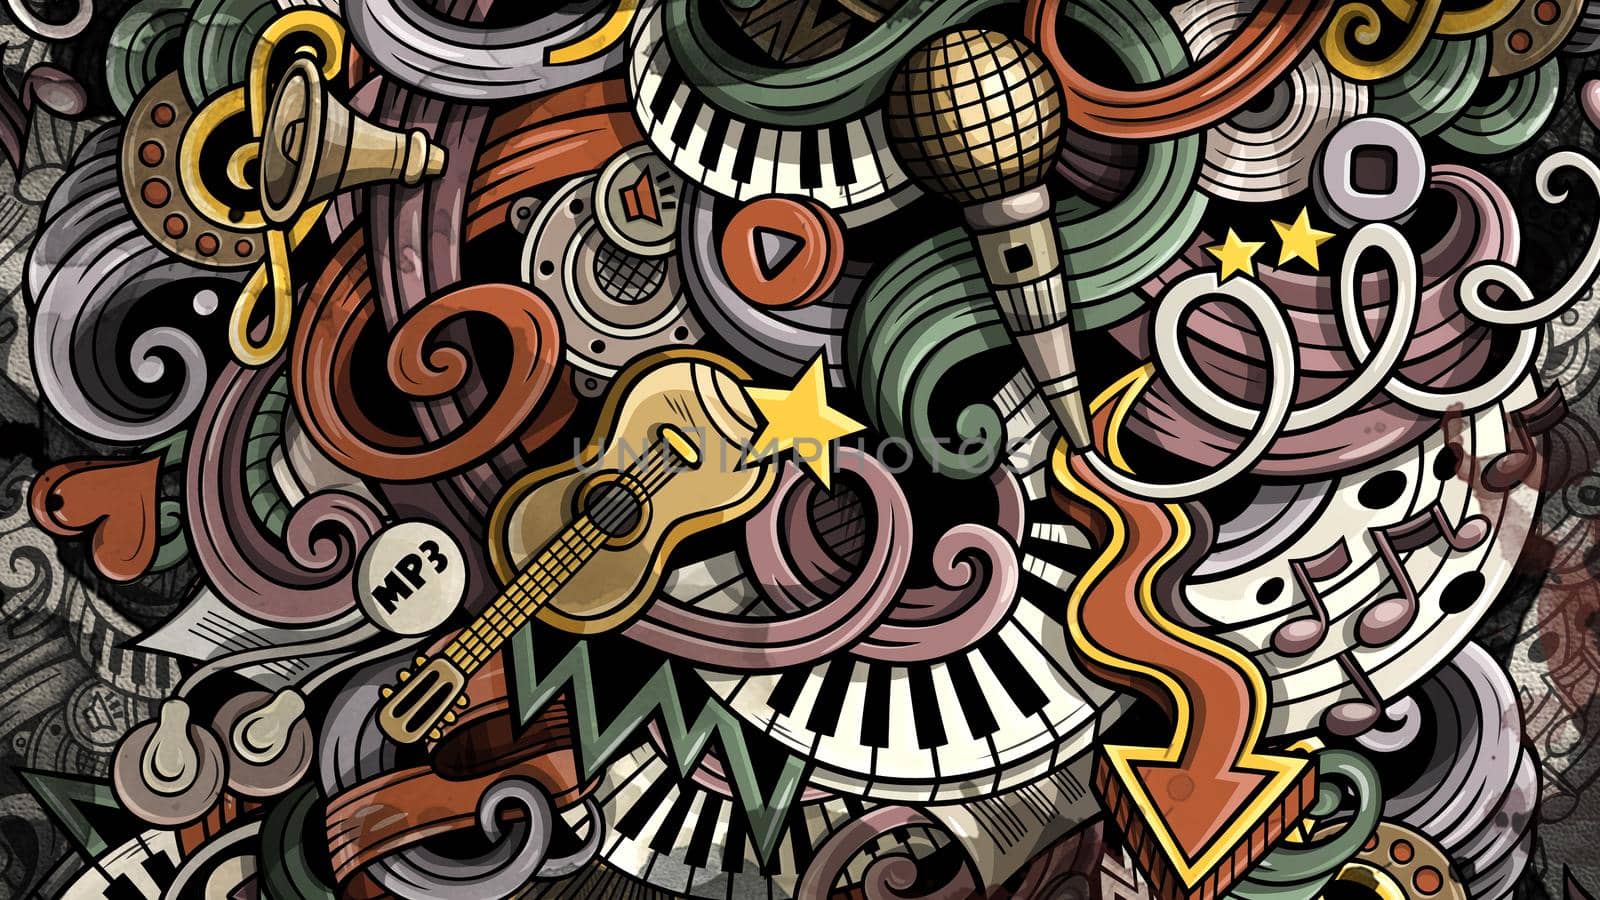 Doodles Music illustration. Creative musical background by balabolka